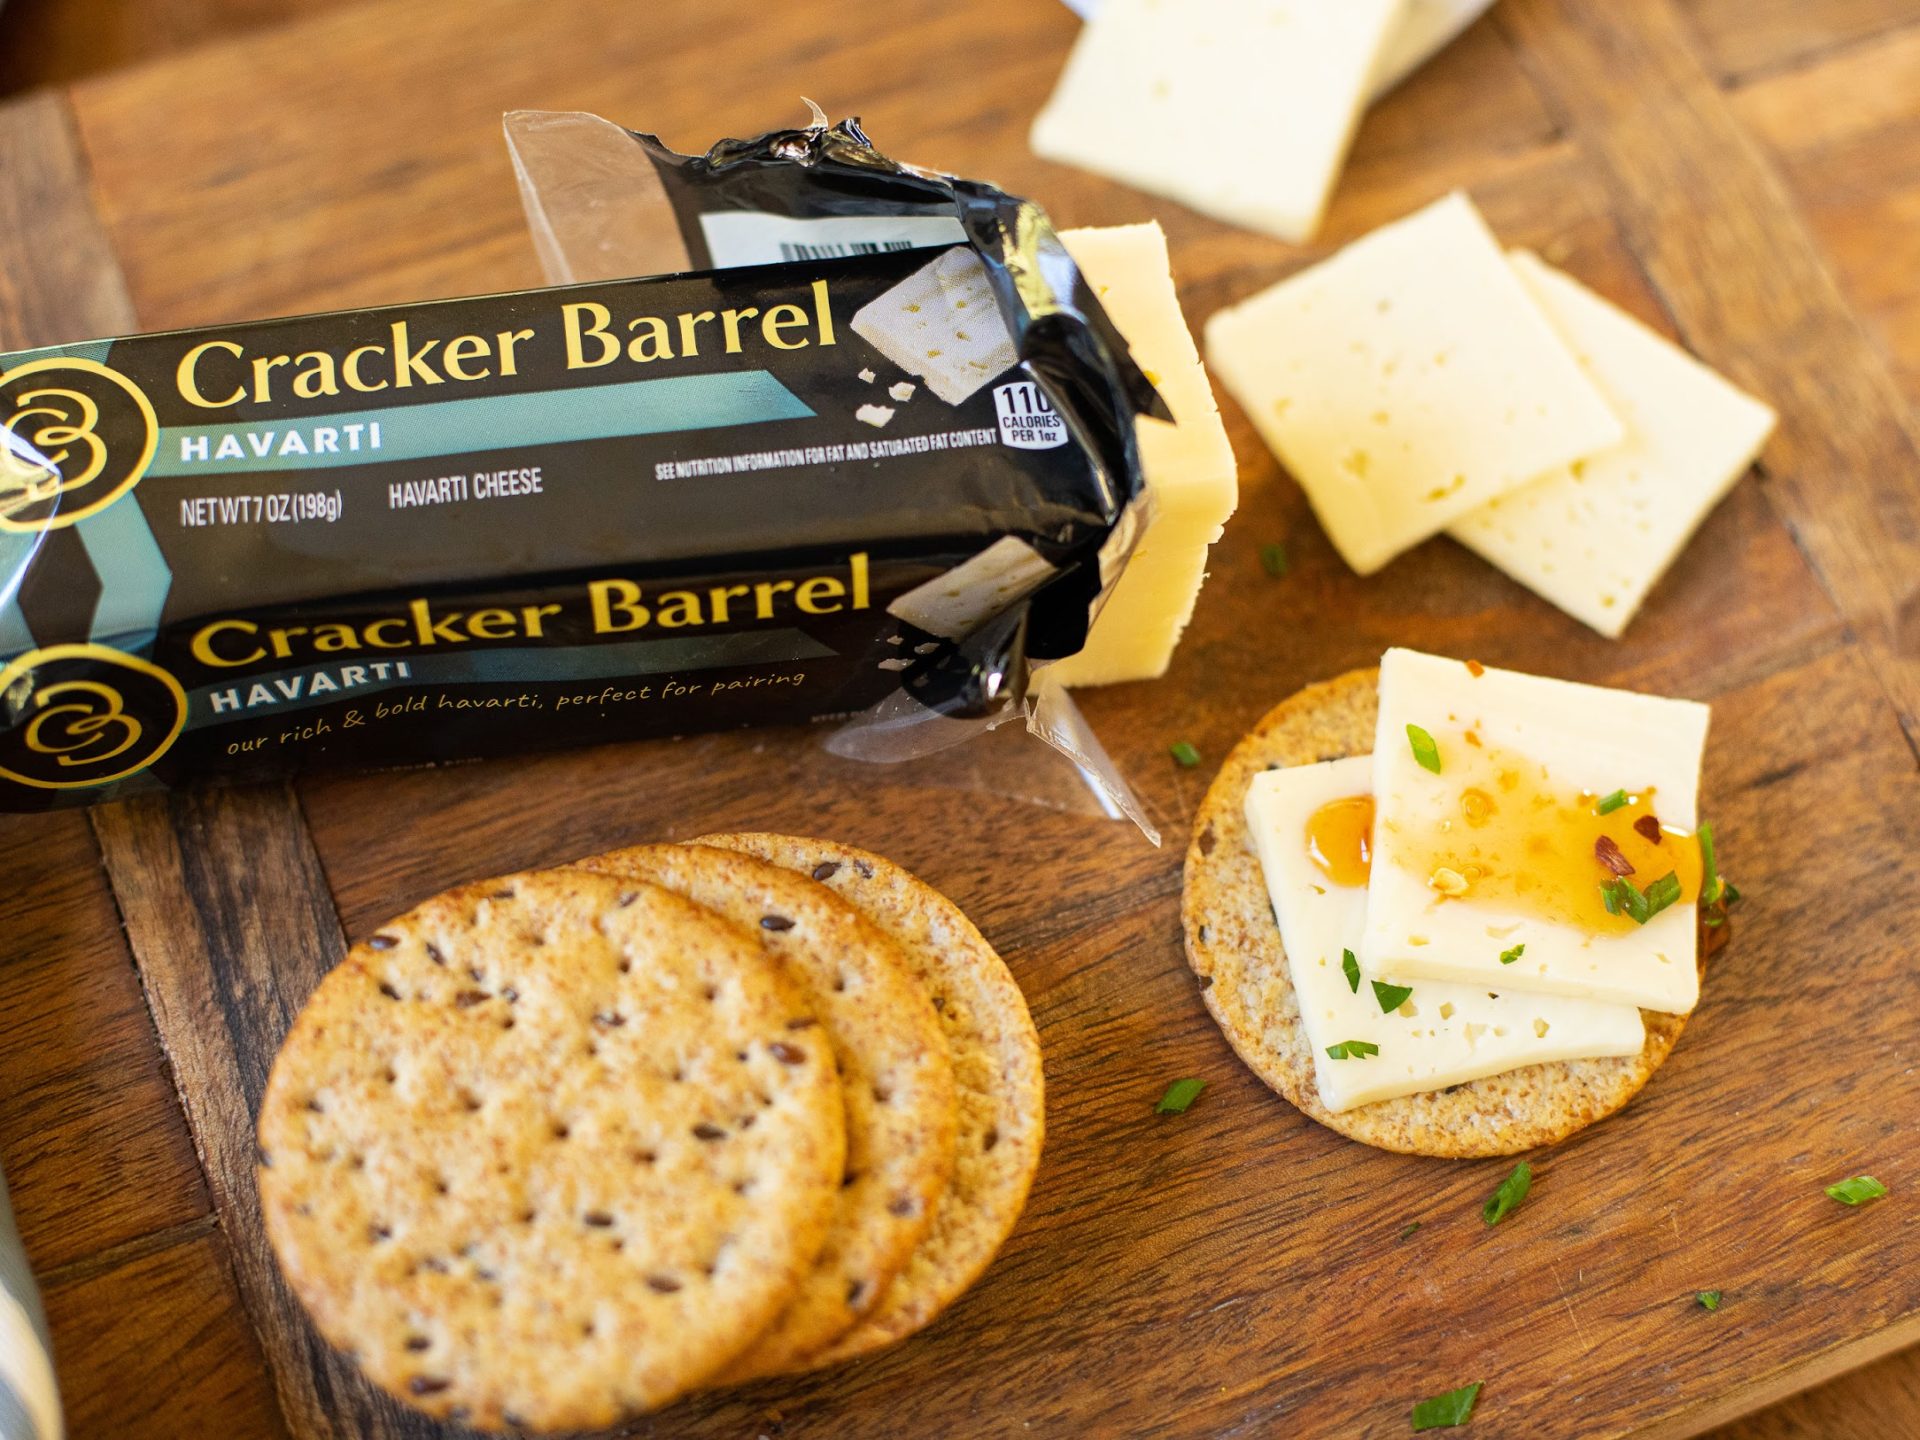 Cracker Barrel Cheese Blocks As Low As $1.99 At Kroger (Plus Cheap Cracker Cut Cheese)